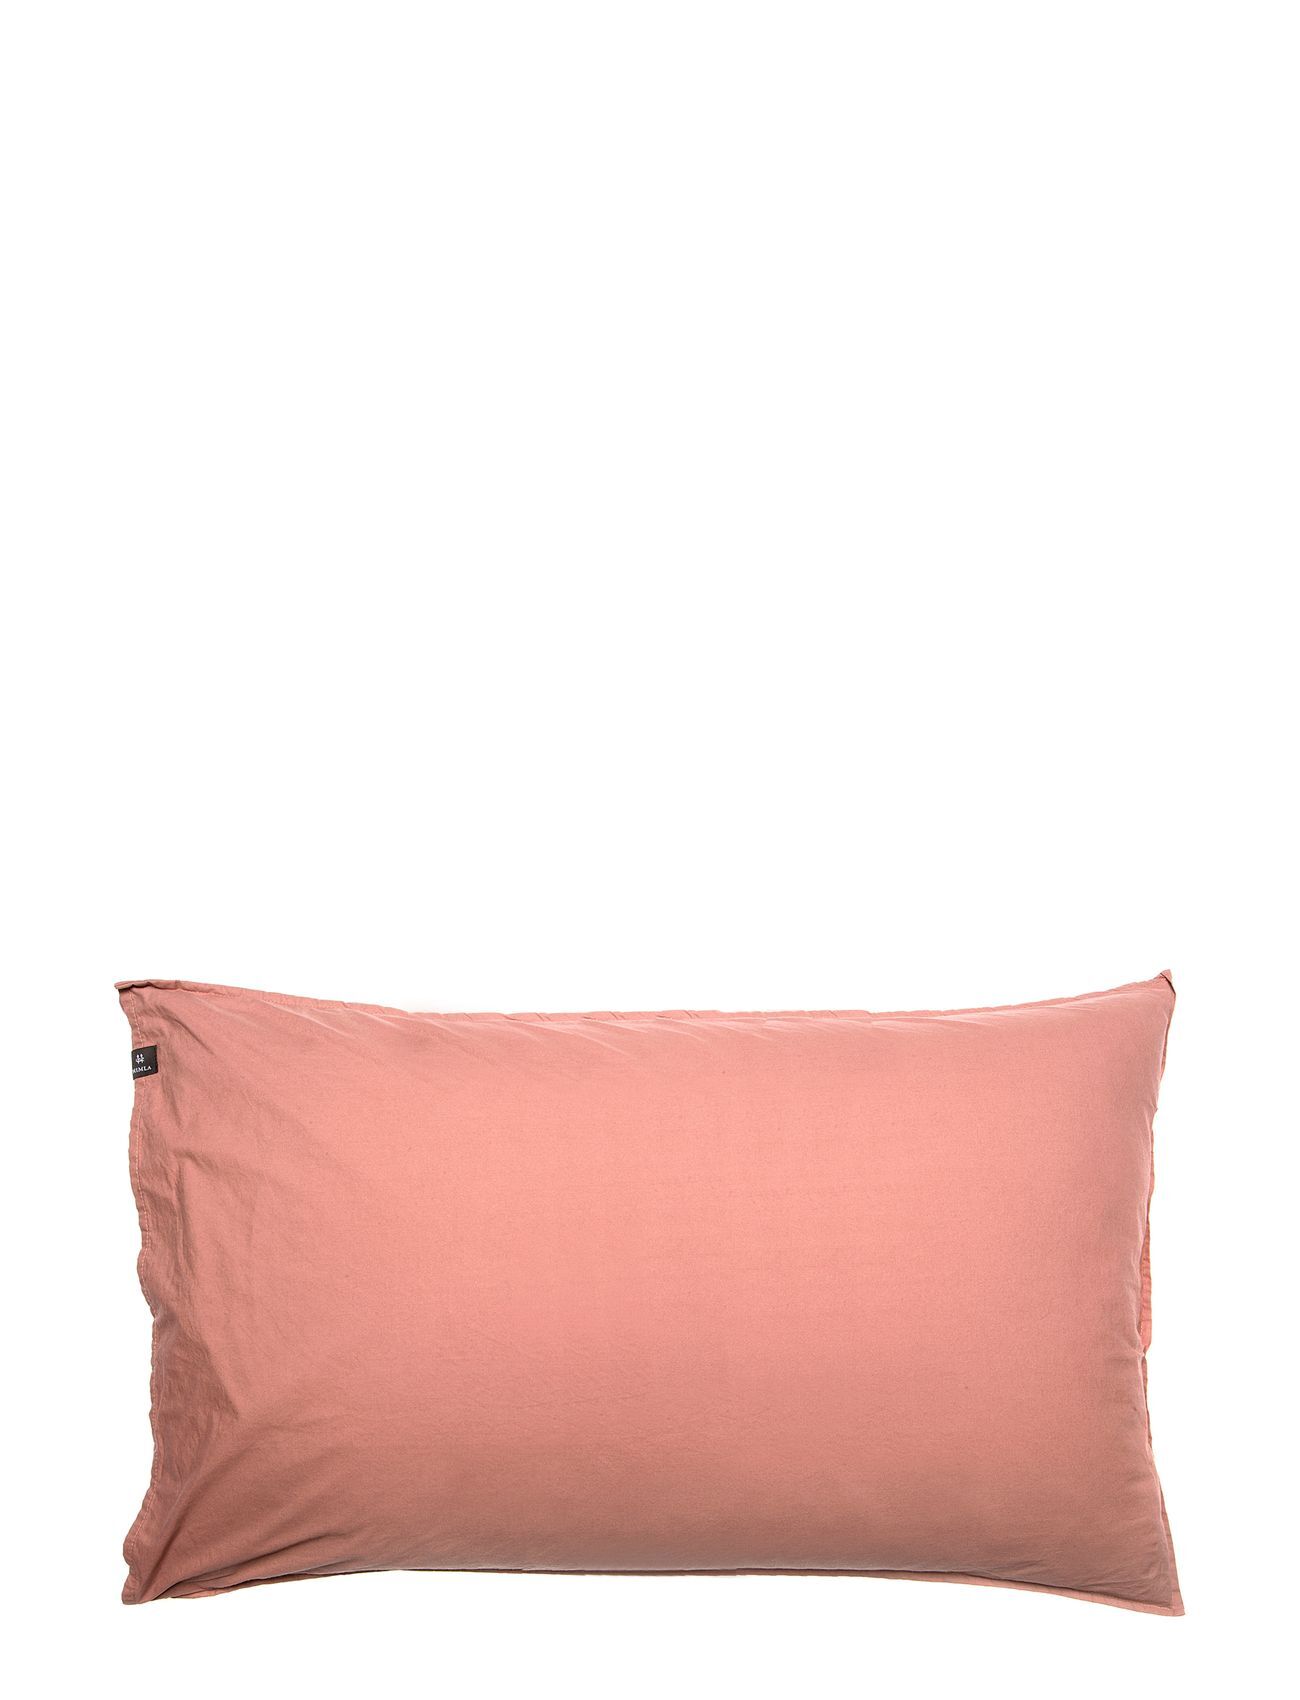 Himla Hope Plain Pillowcase Home Textiles Bedtextiles Pillow Cases Rosa Himla